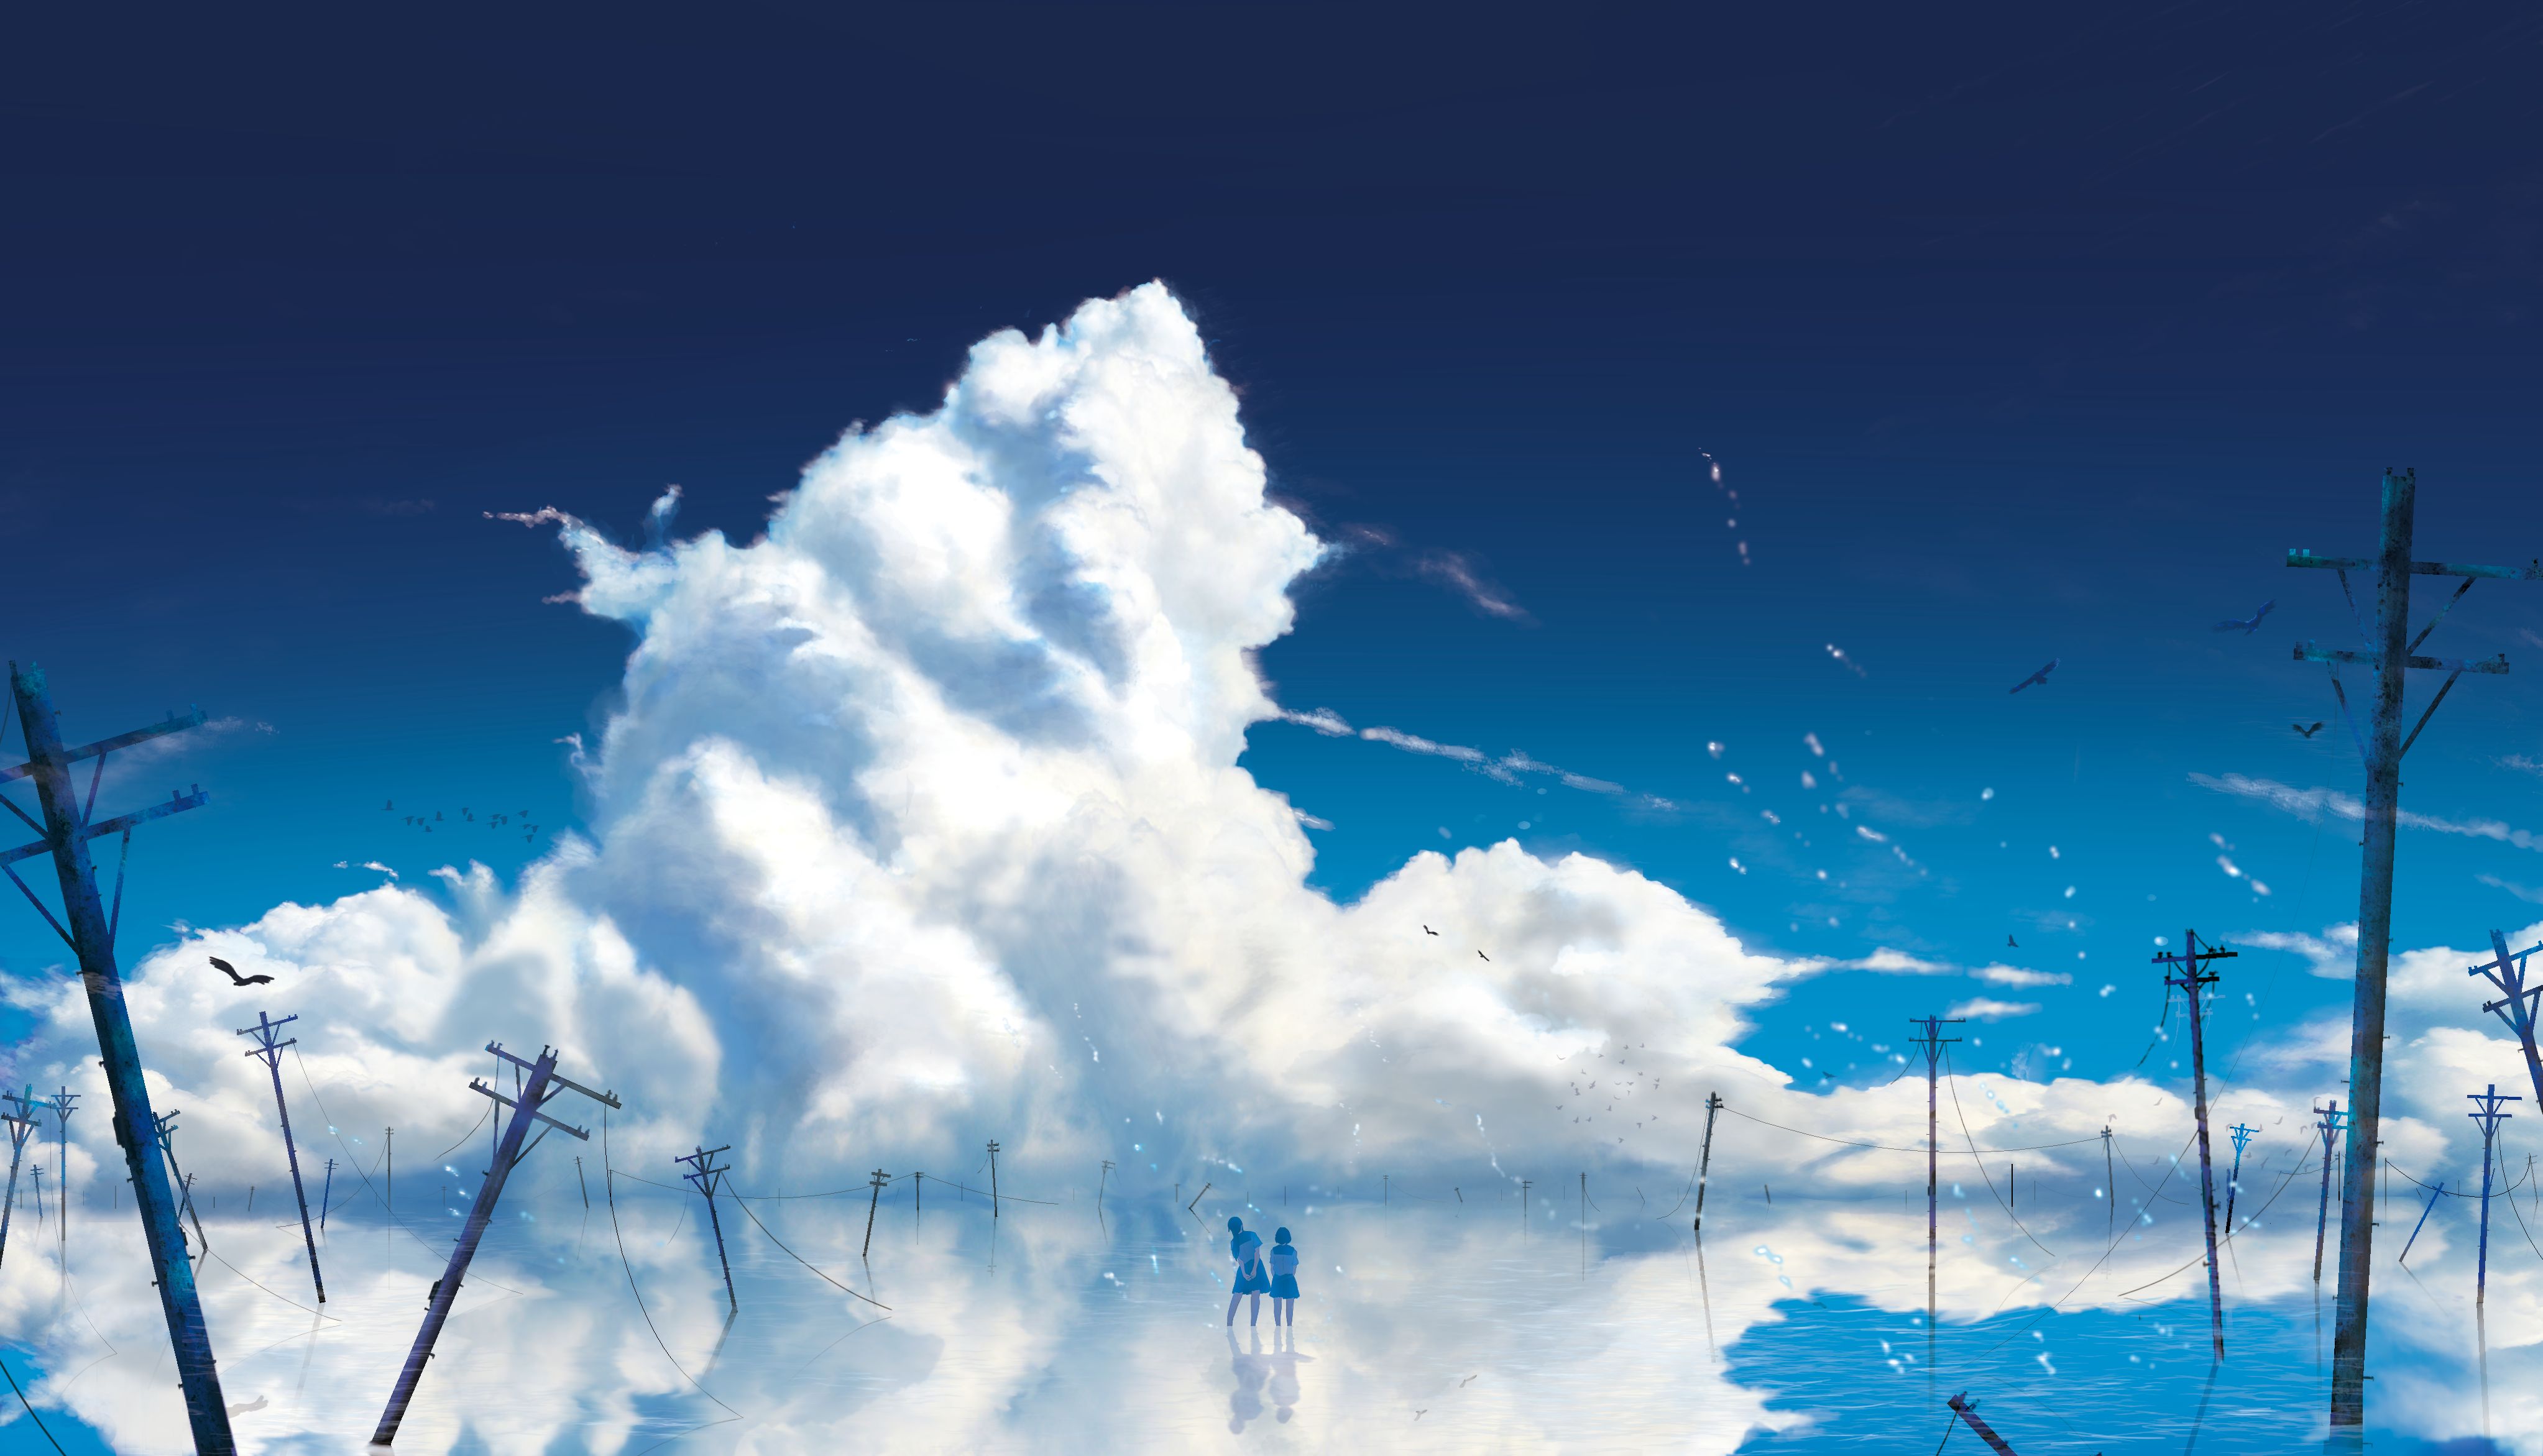 121945 Pink Nature Anime Clouds Sky Cyan Digital Art Artwork Dragon  Fantasy Art  Android  iPhone HD Wallpaper Background Download HD  Wallpapers Desktop Background  Android  iPhone 1080p 4k 1080x675  2023